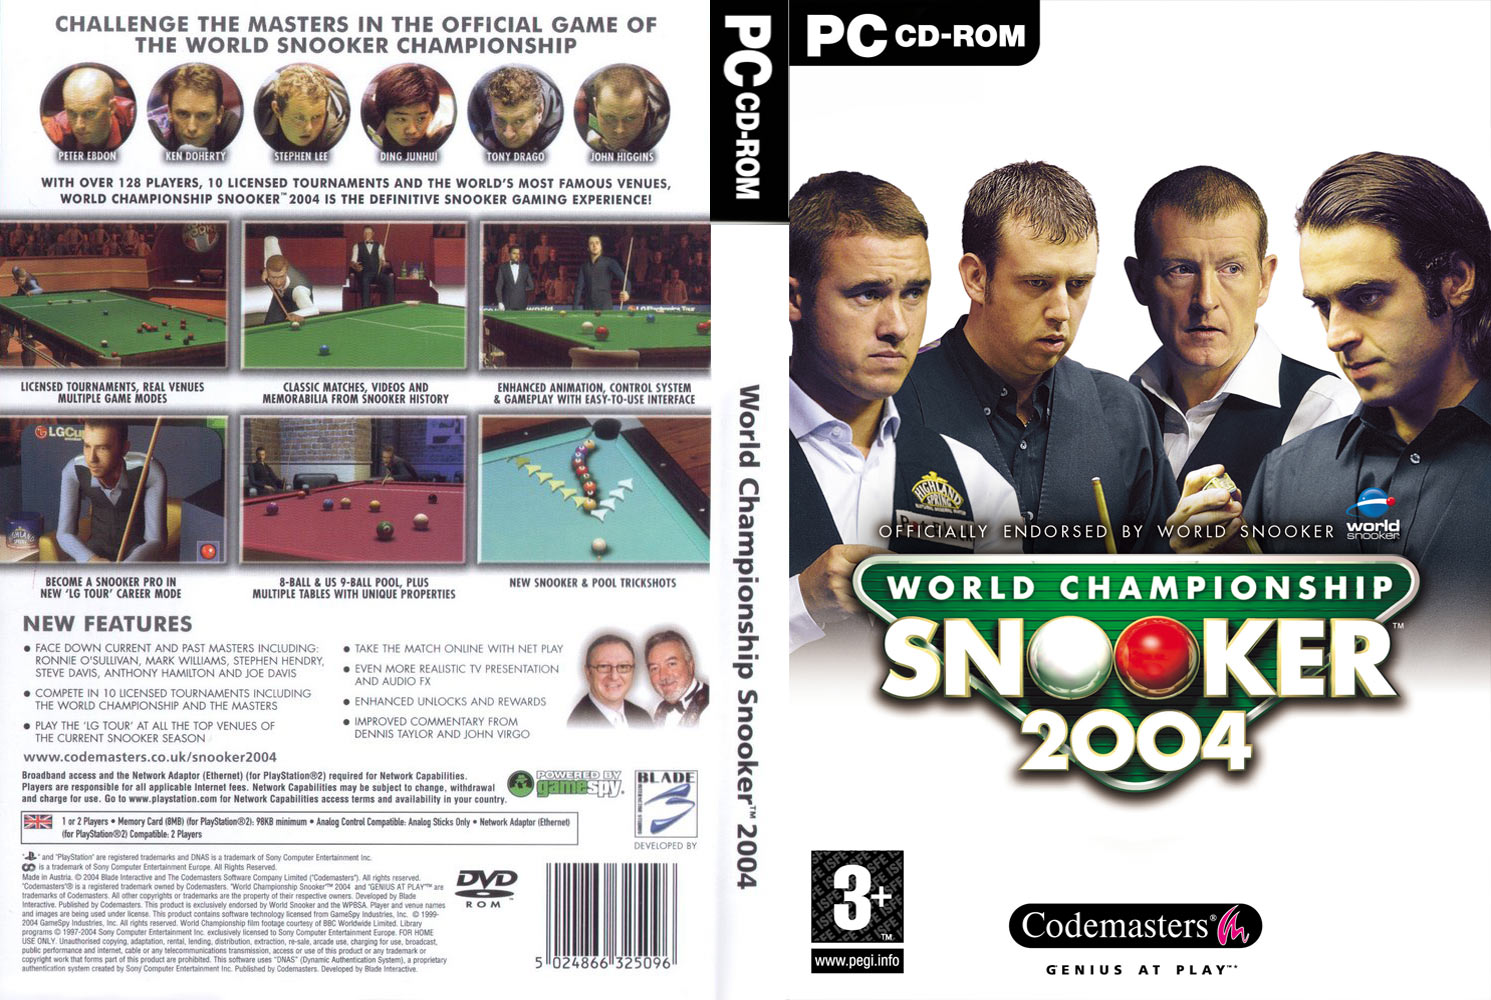 World Championship Snooker 2004 - DVD obal